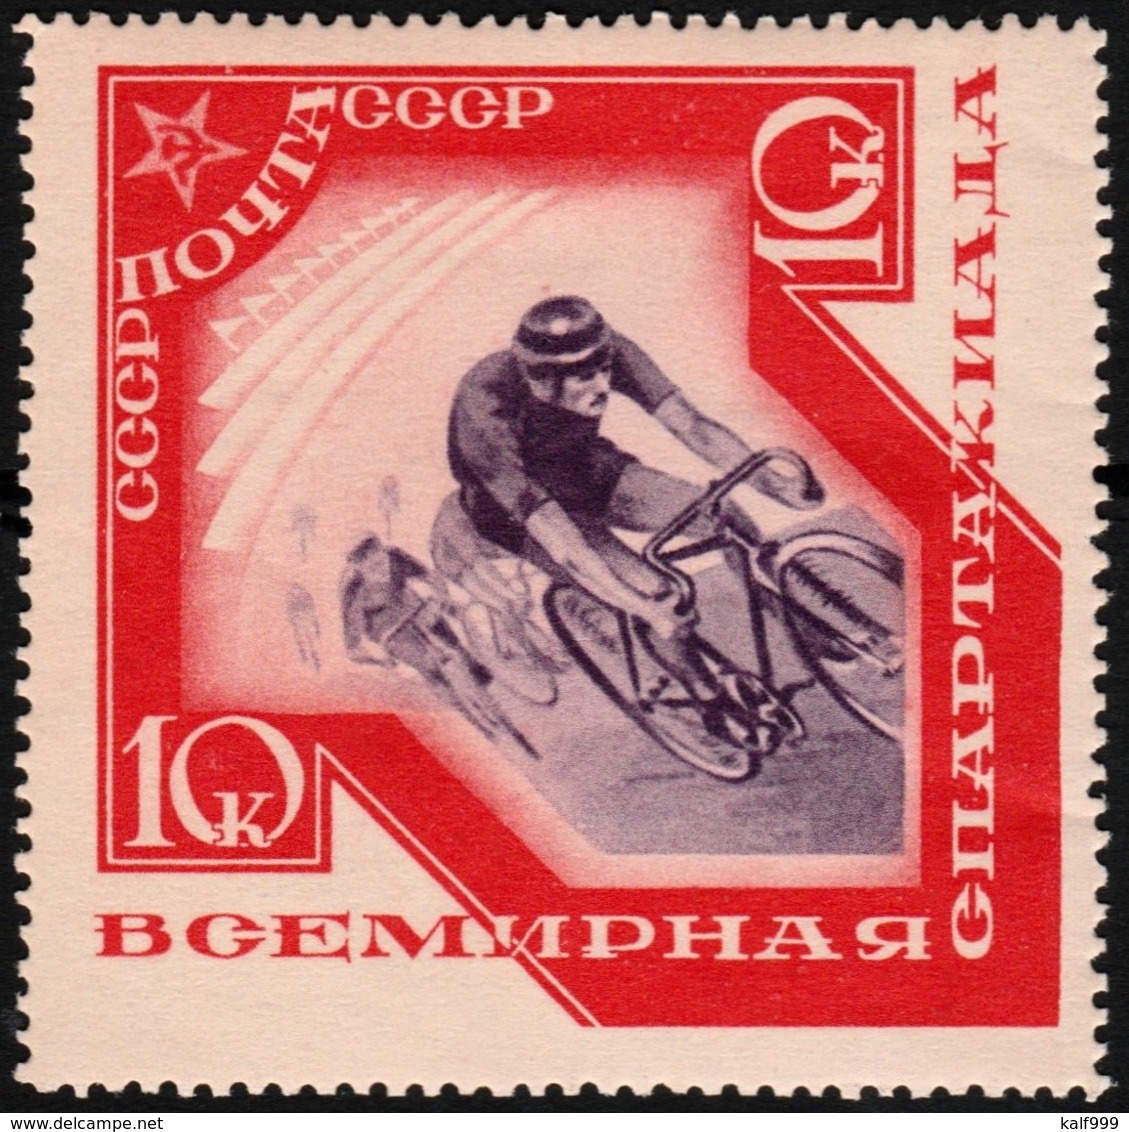 ~~~  Sowjet Union 1935 - Spartakiade Sports Cycling - Mi. 518 MH * OG ~~~ - Ongebruikt